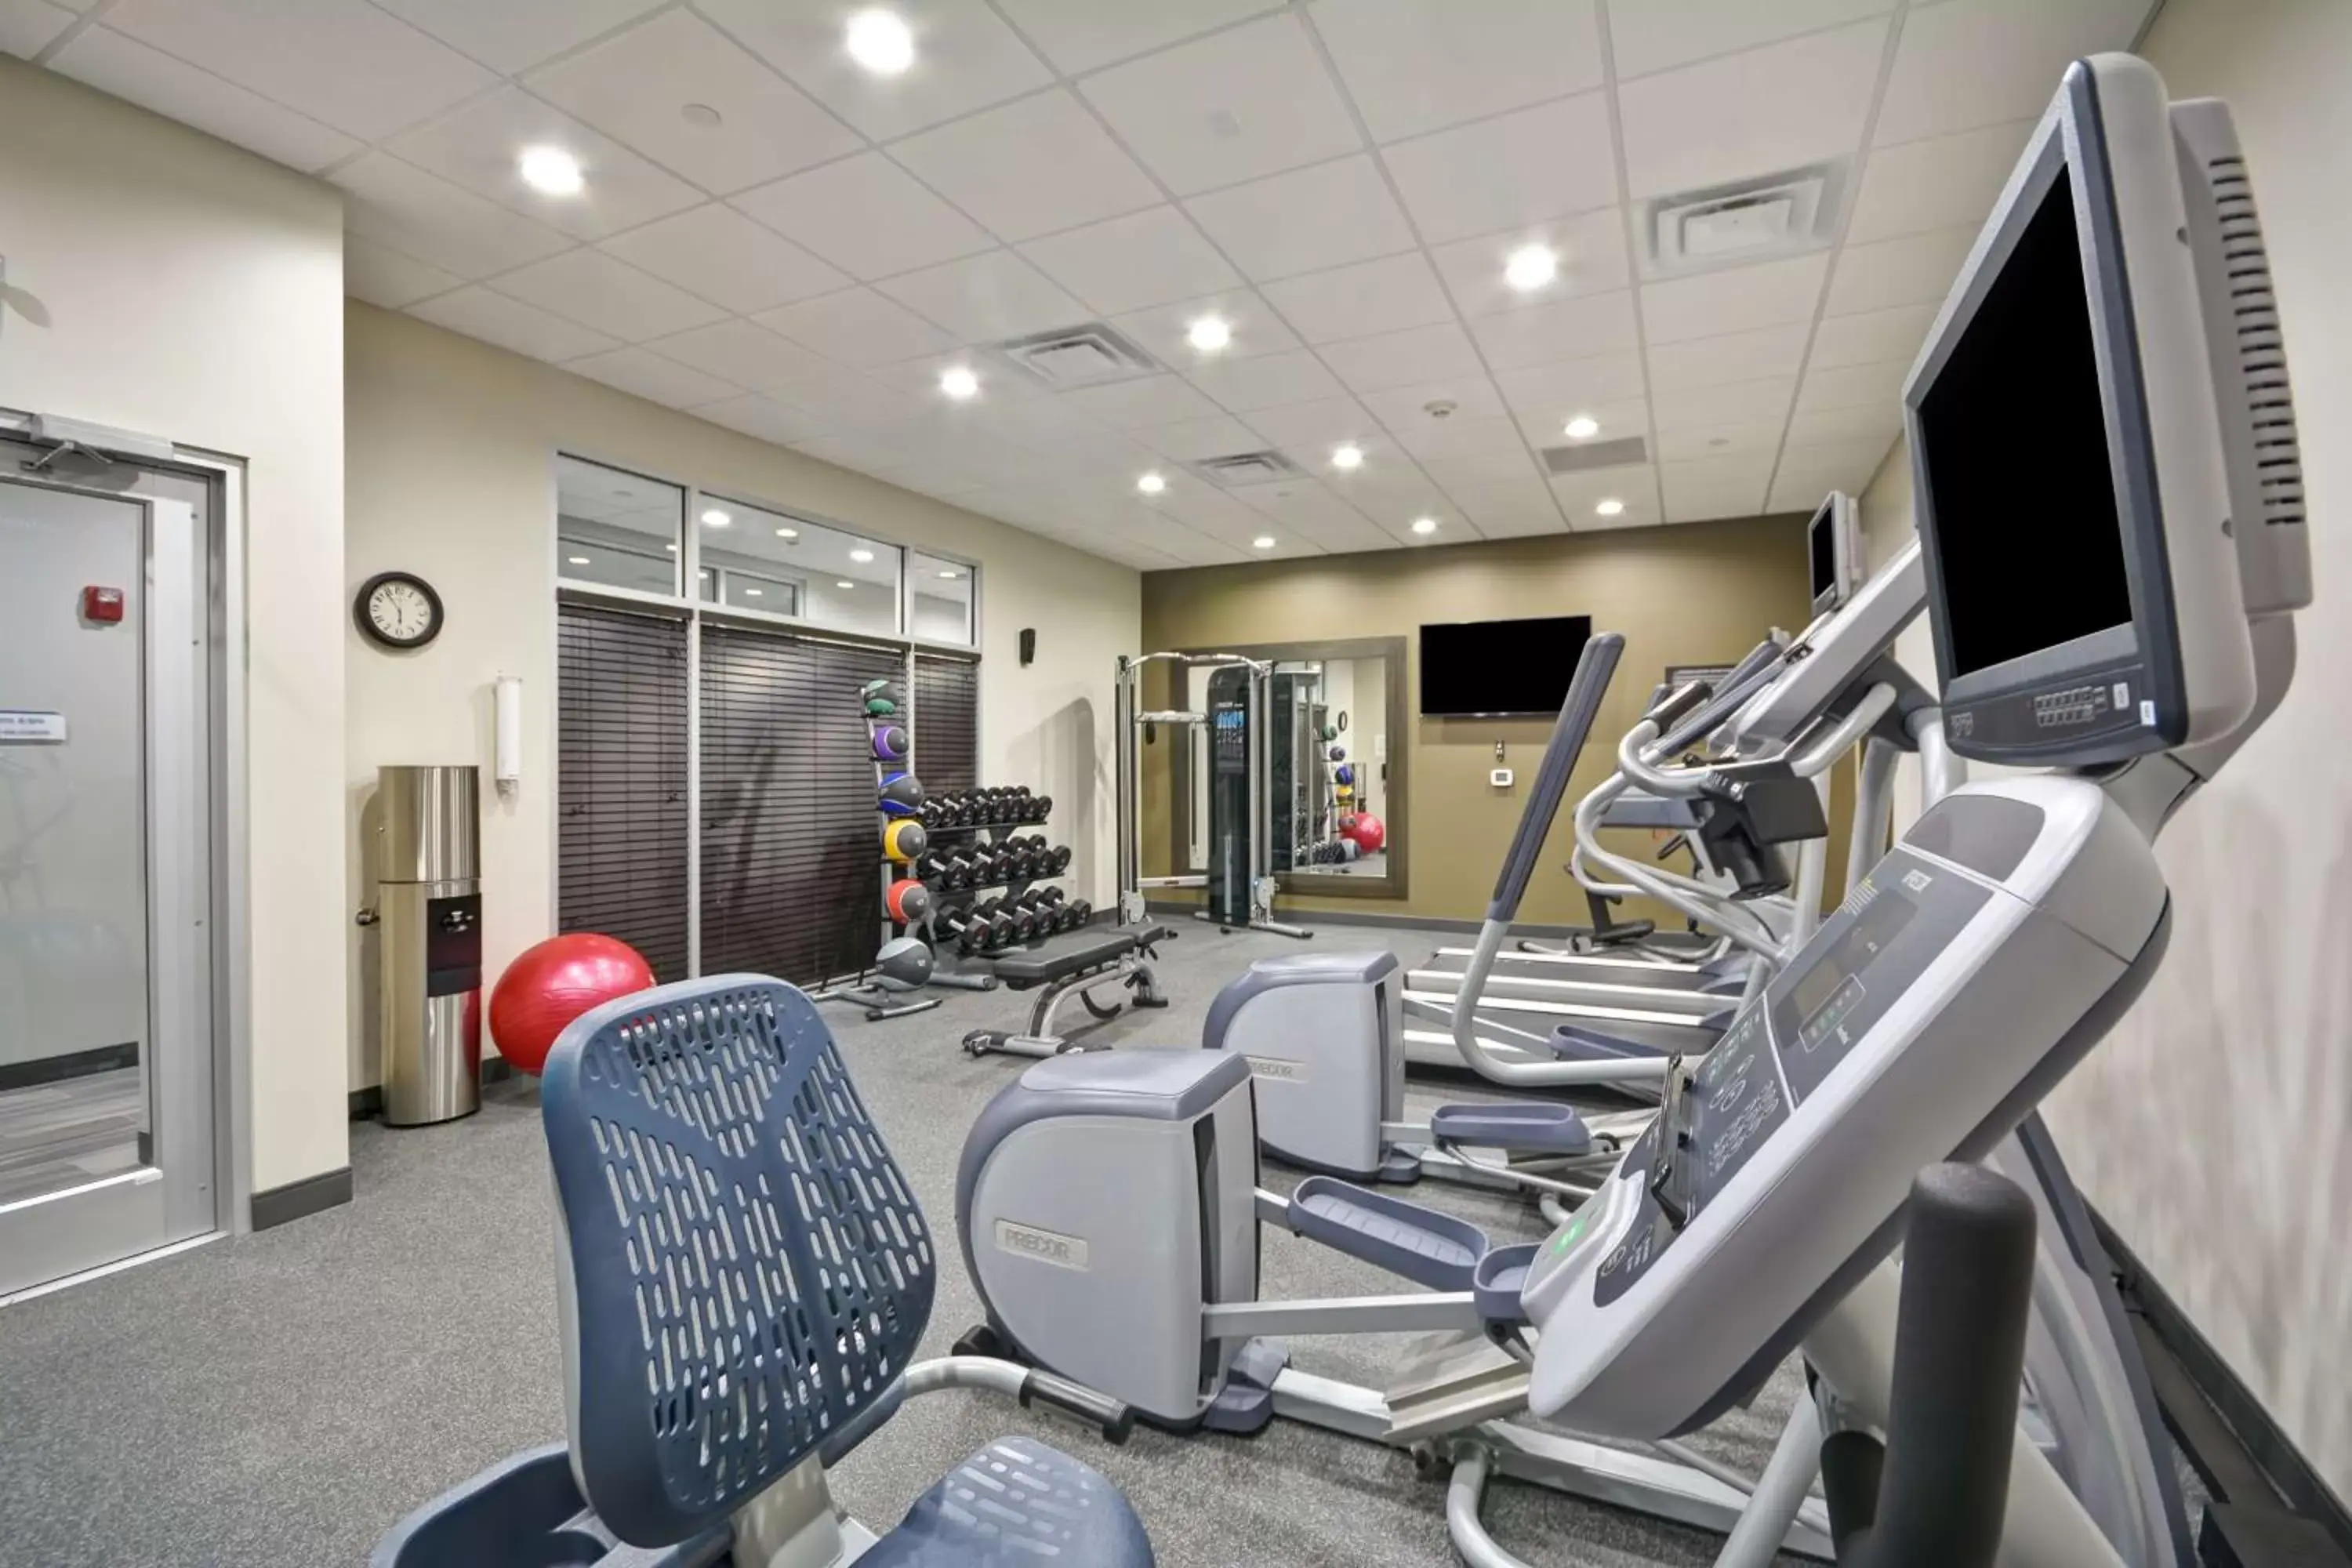 Fitness centre/facilities, Fitness Center/Facilities in Hilton Garden Inn Tulsa-Broken Arrow, OK